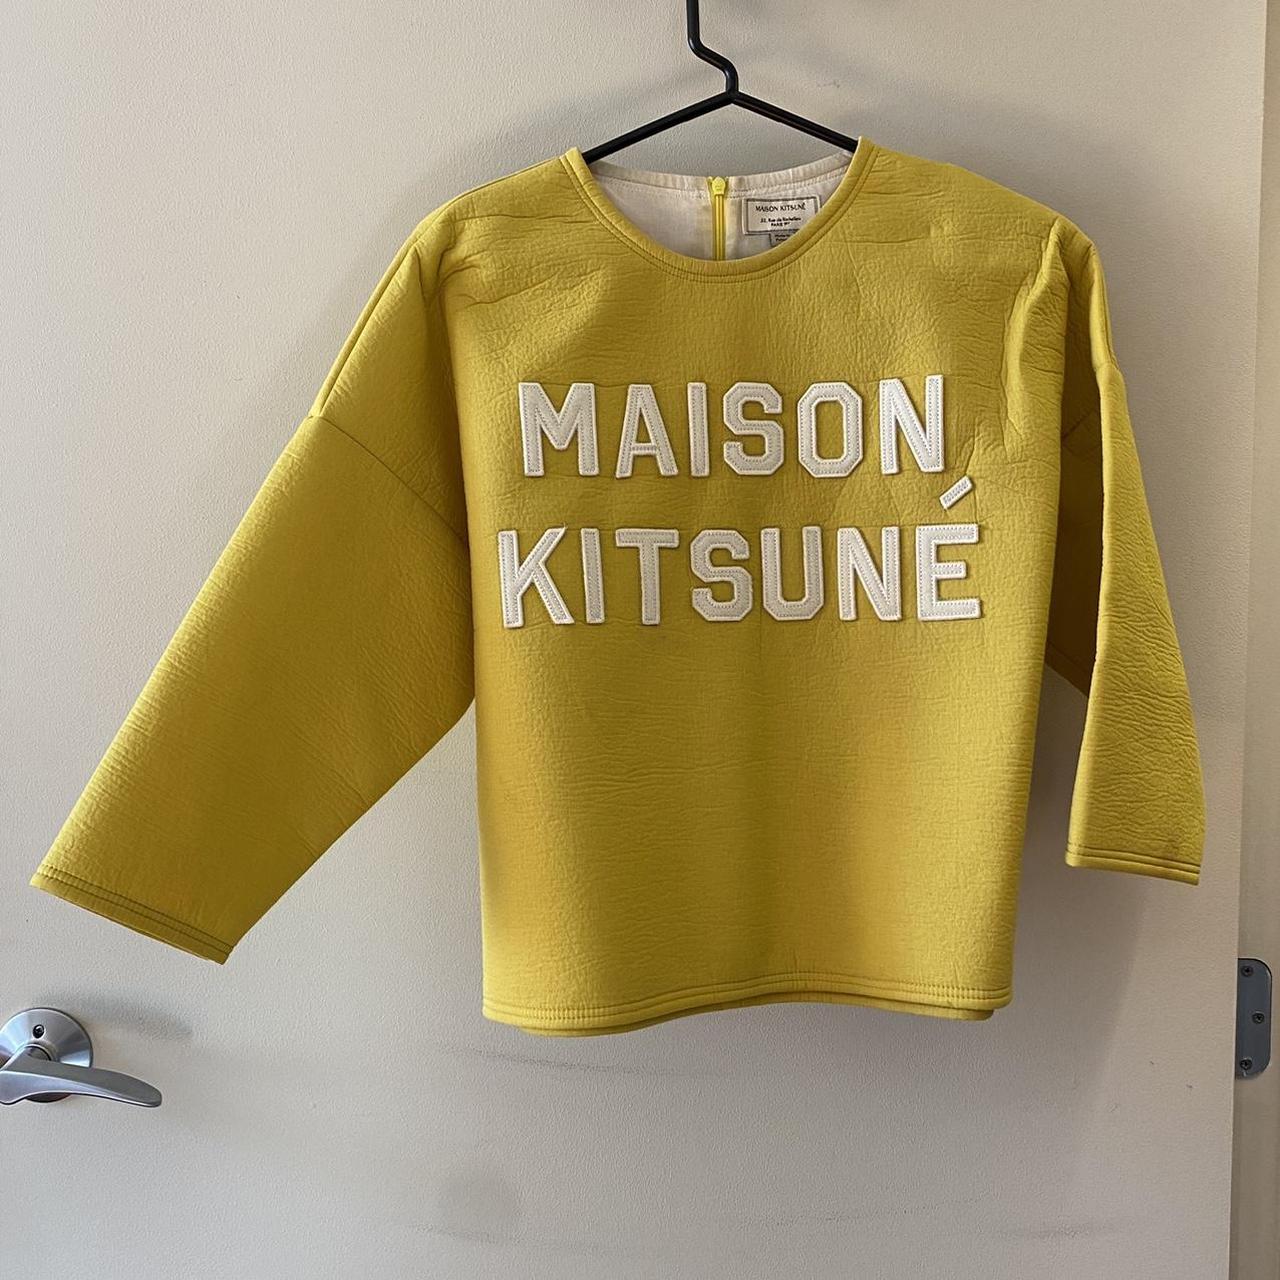 Maison Kitsuné Women's Yellow and White Top